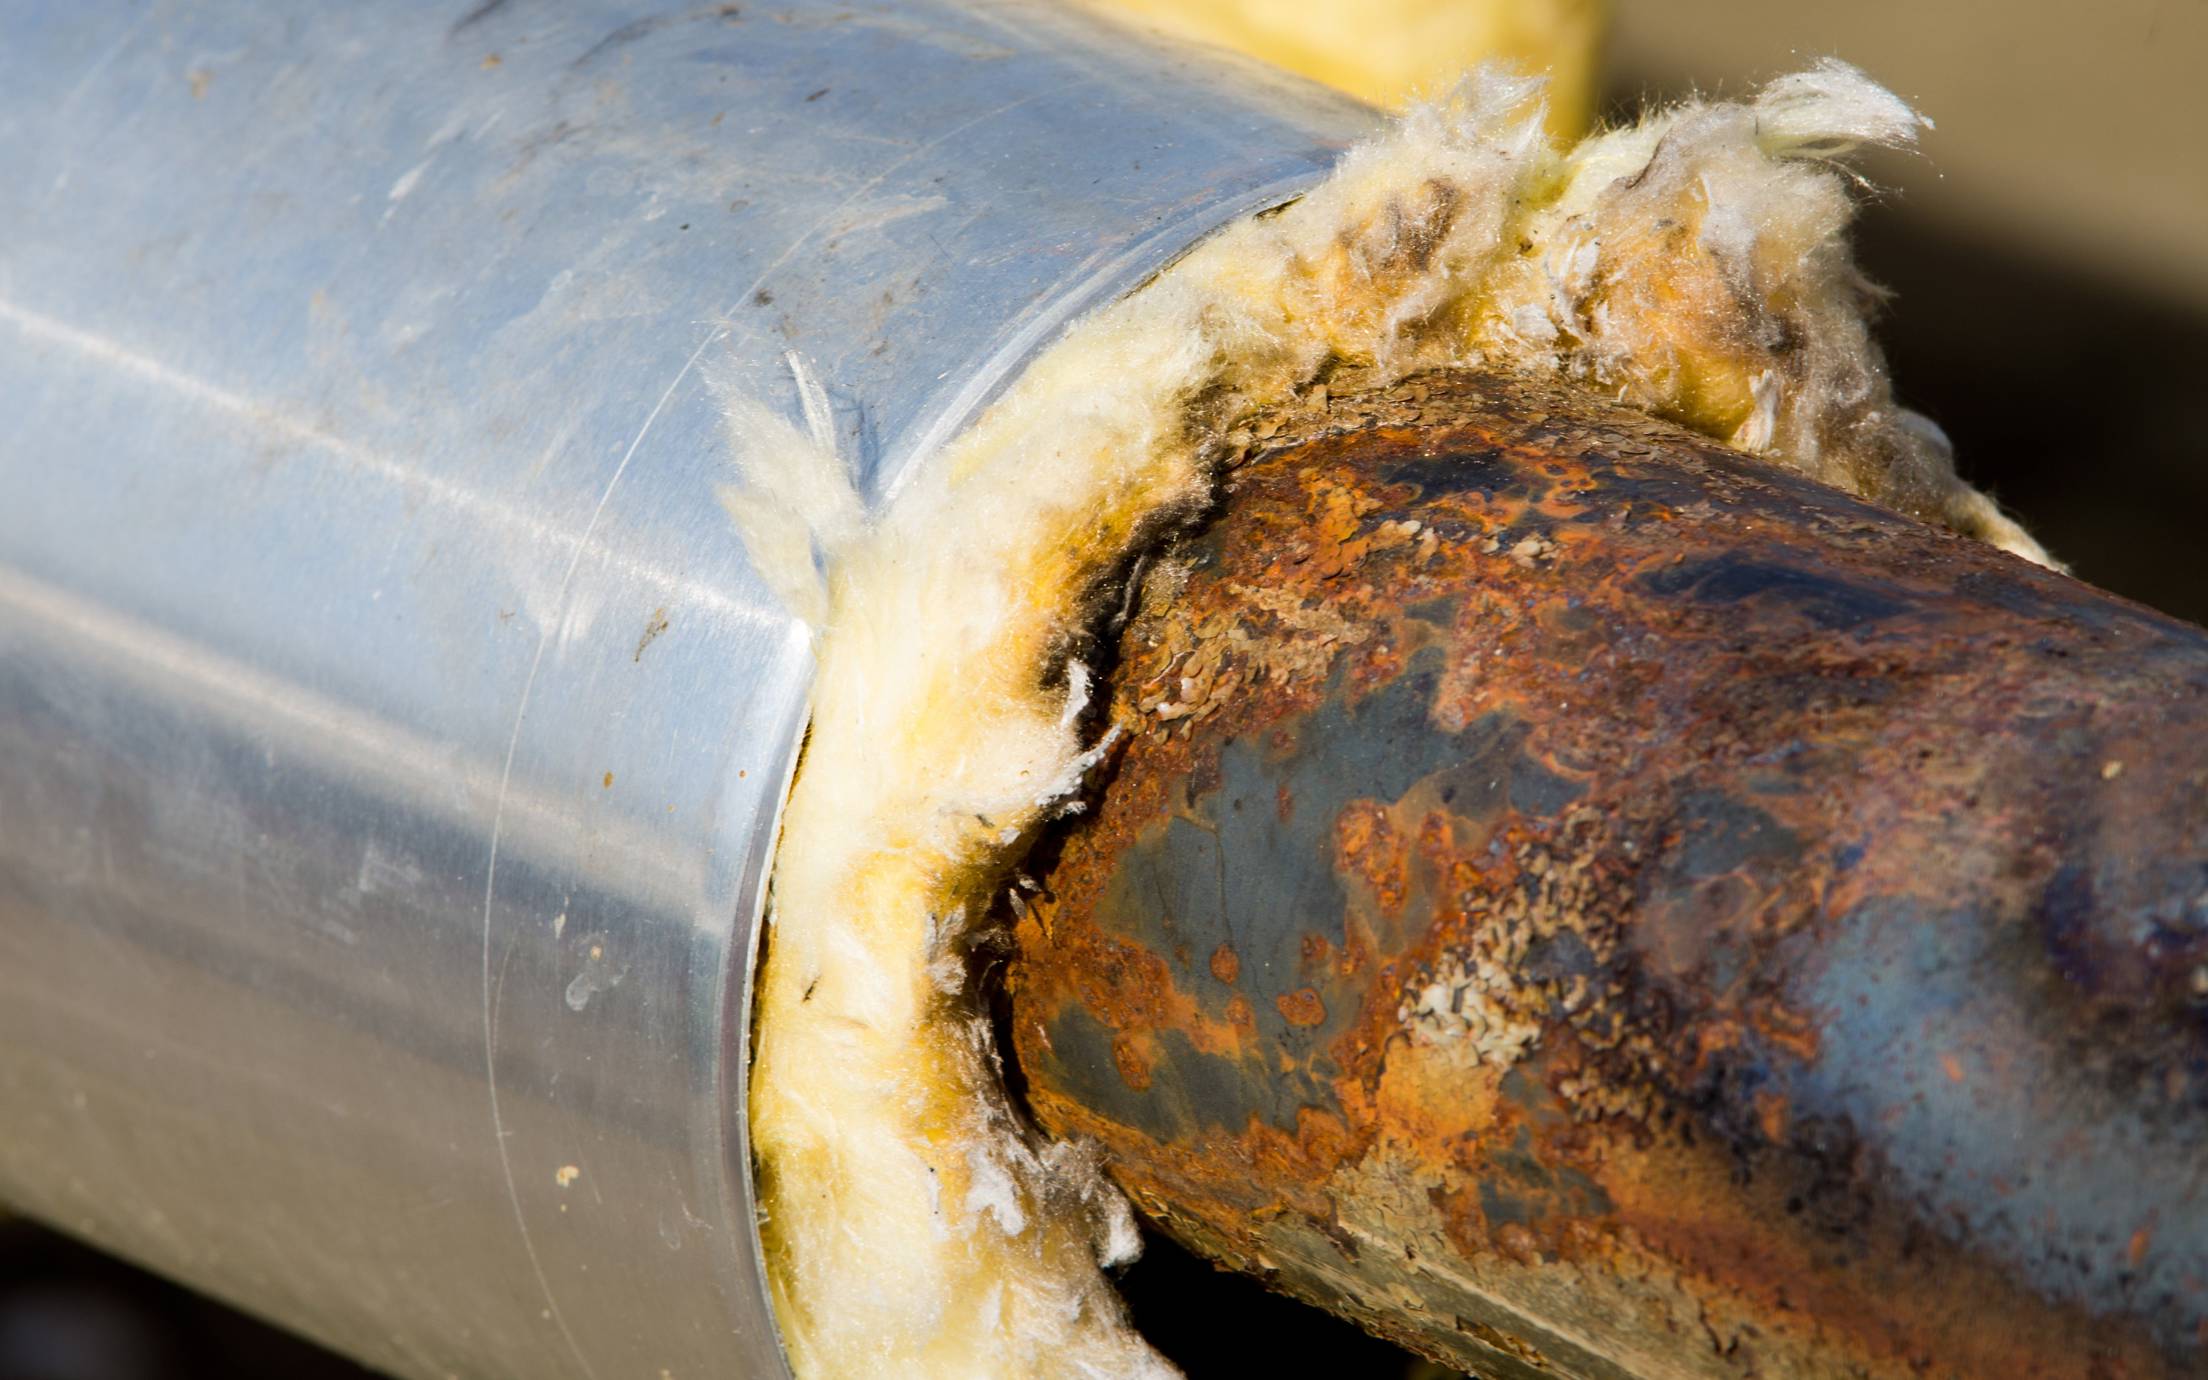 Corrosion under insulation in pipe